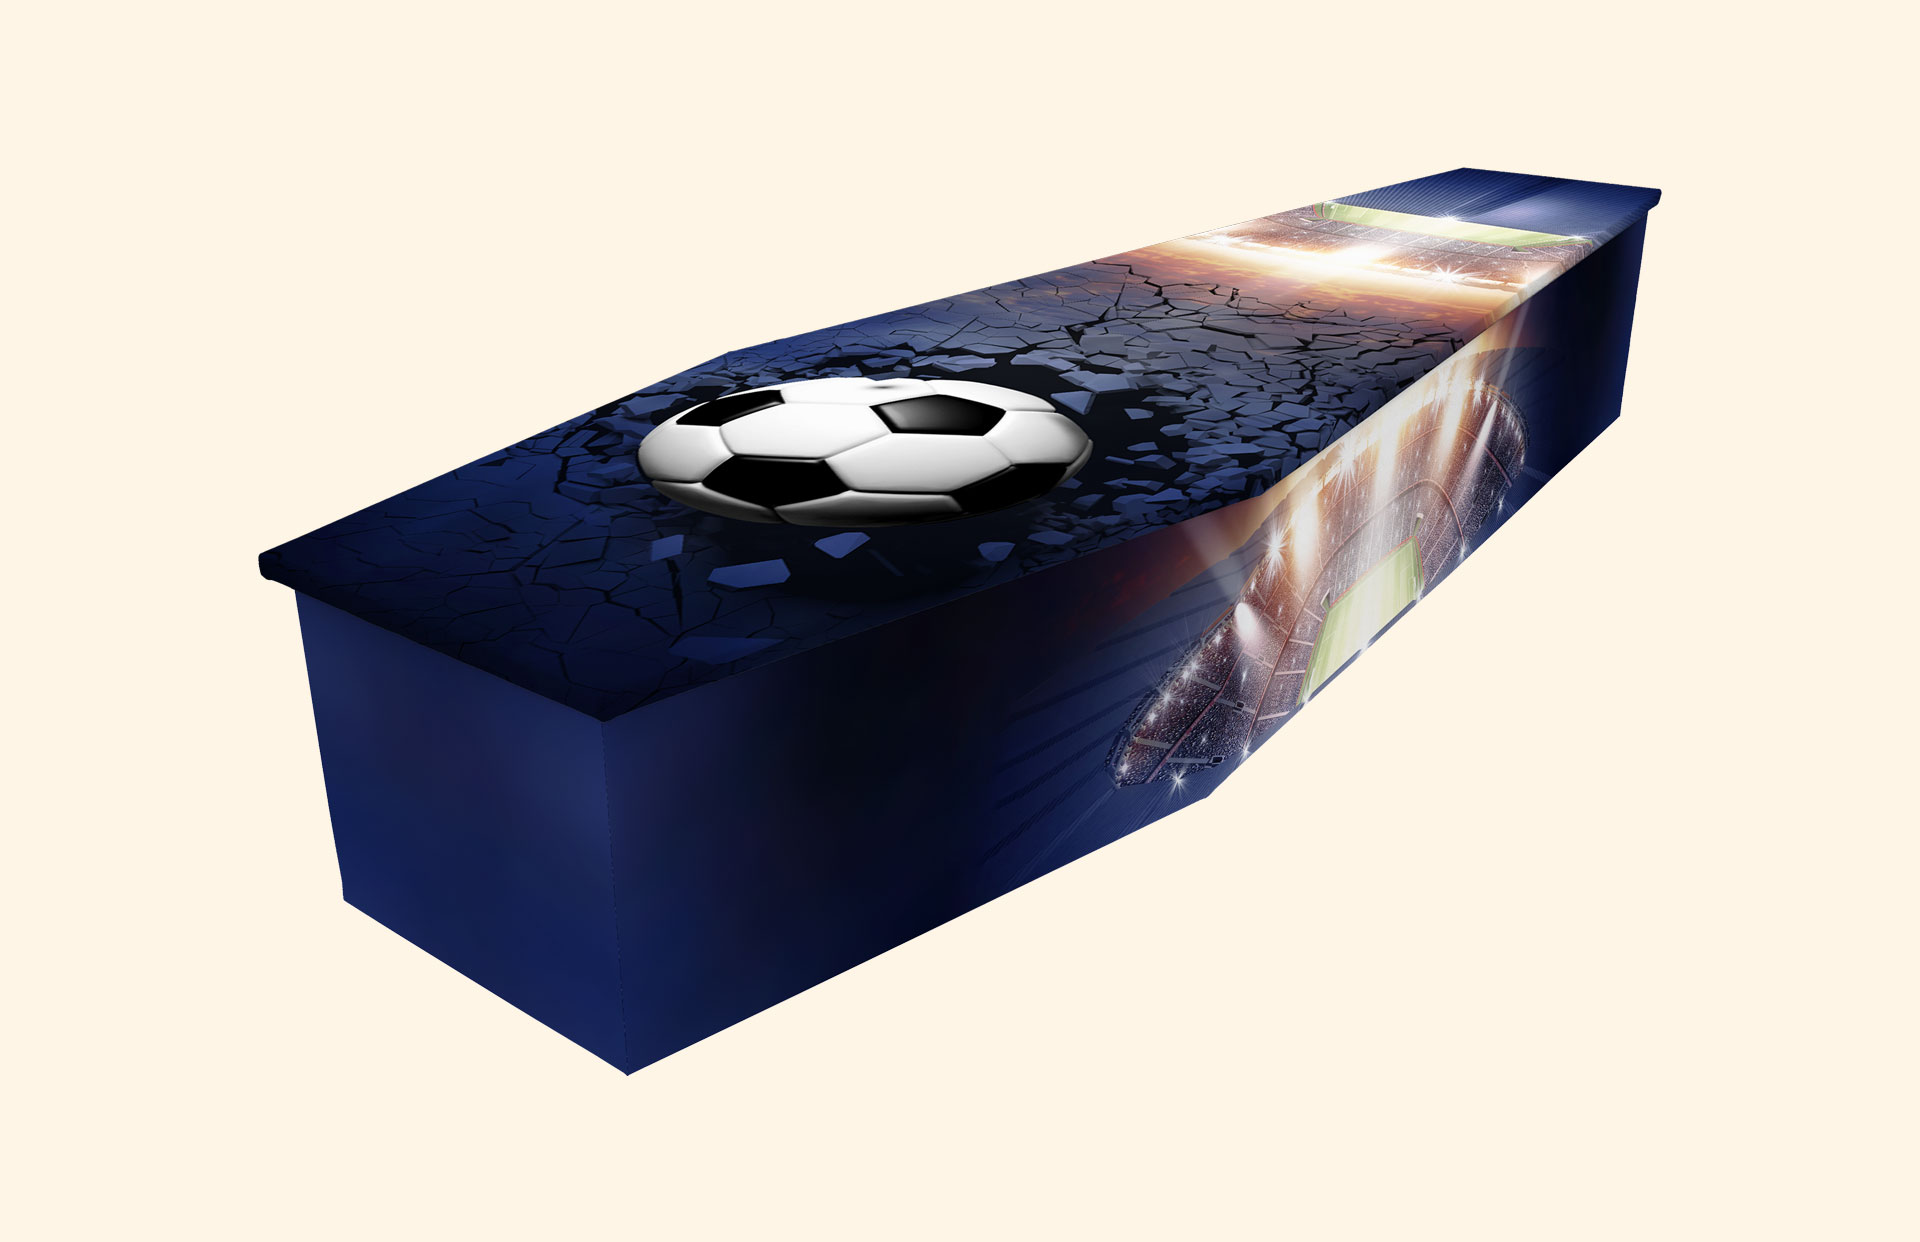 Game On design on a cardboard coffin